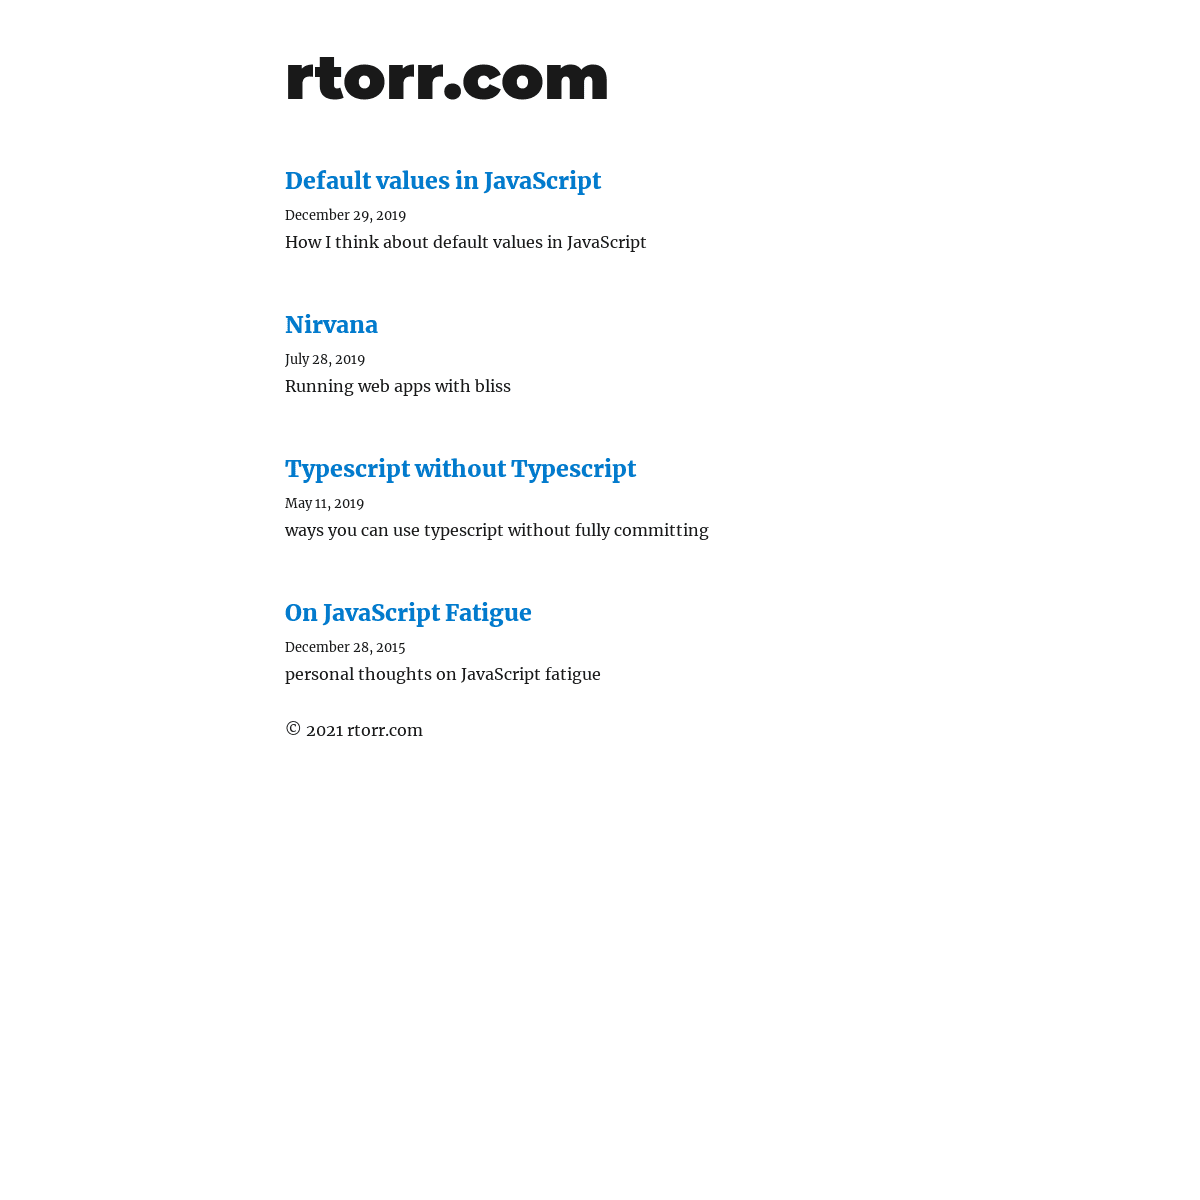 A complete backup of https://rtorr.com